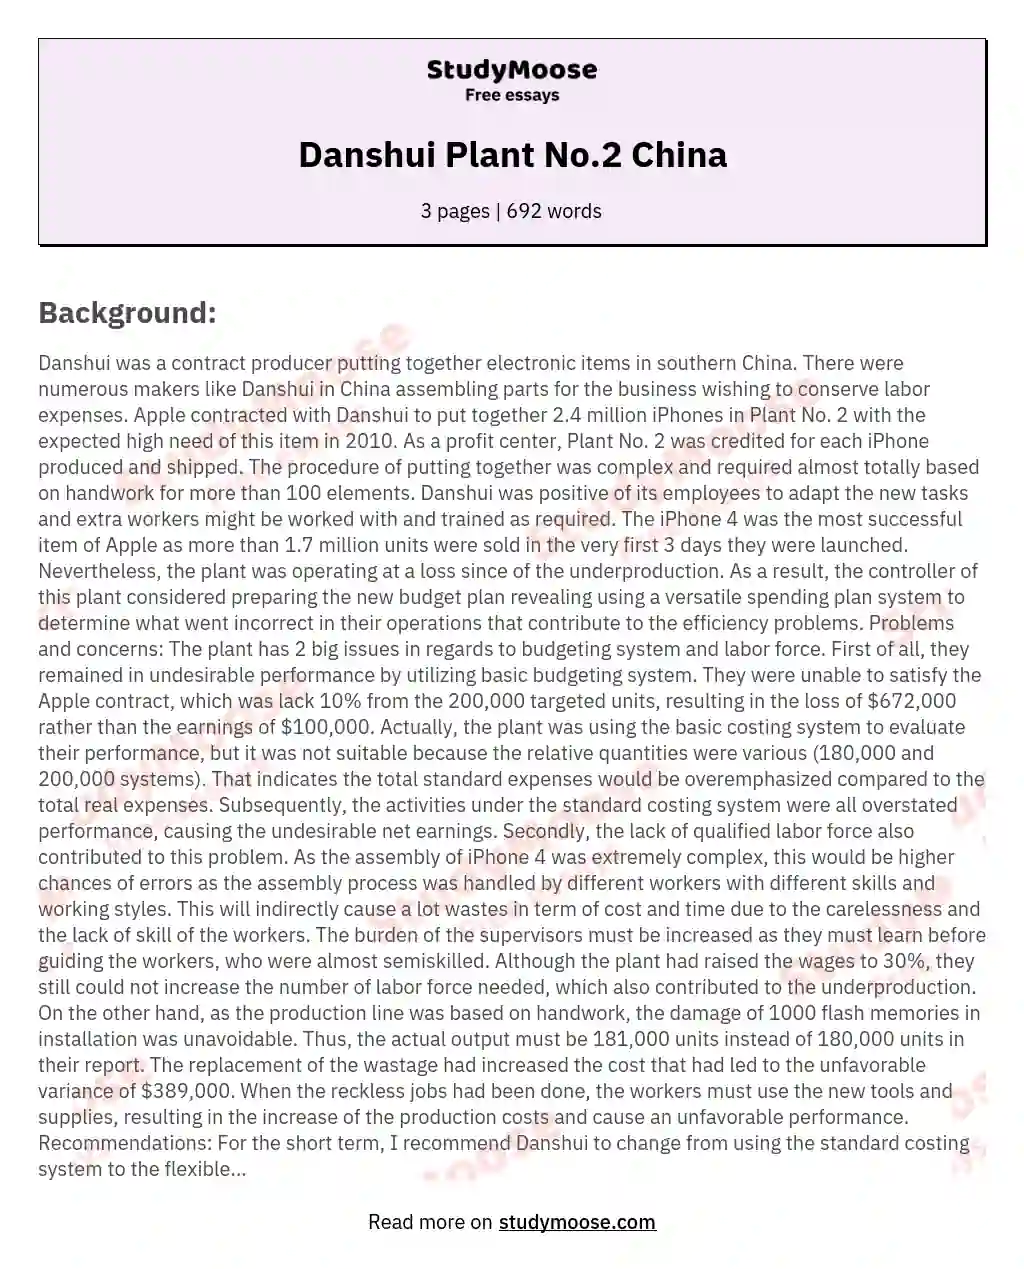 Danshui Plant No.2 China essay